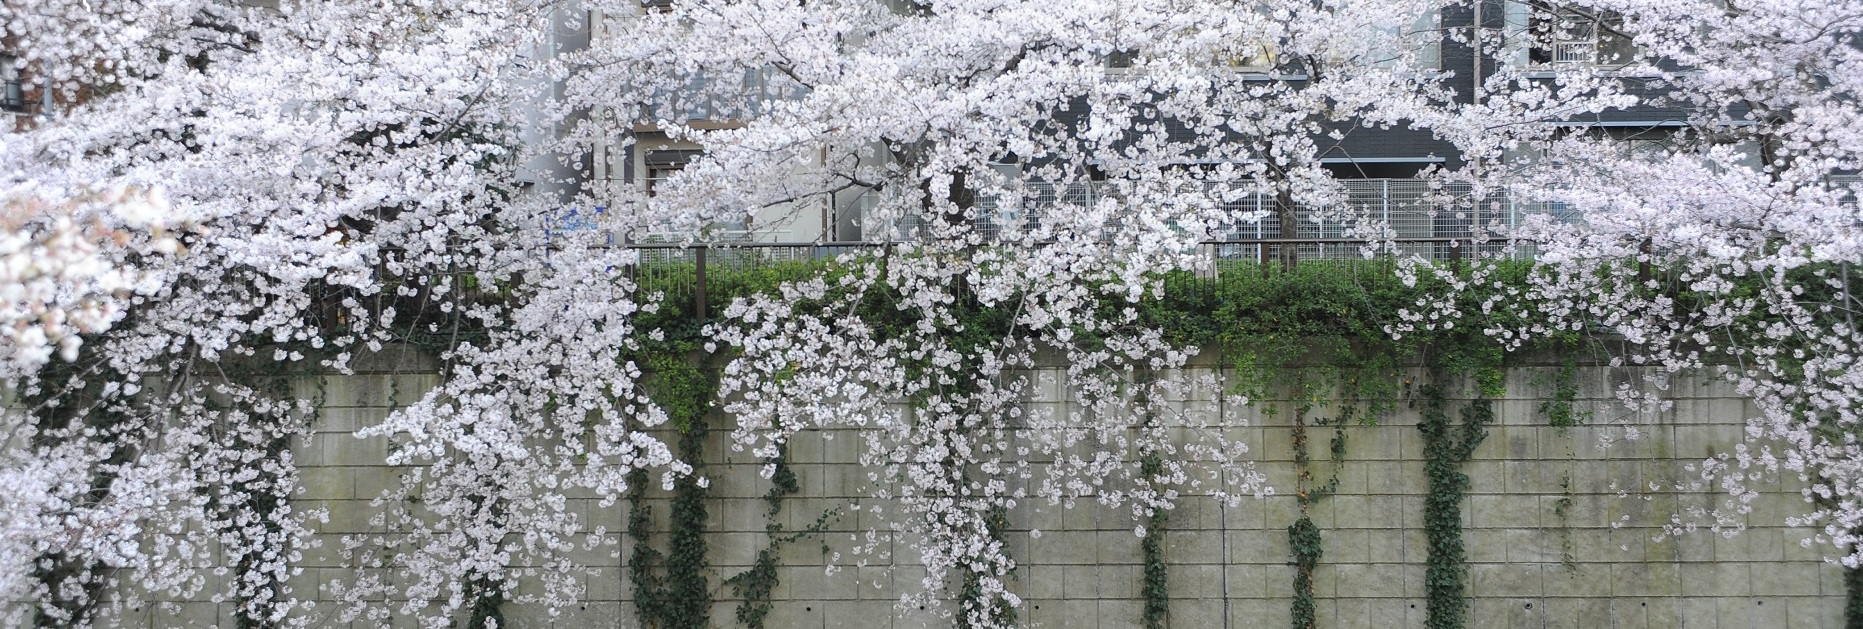 Sakura blossom along the Meguro River